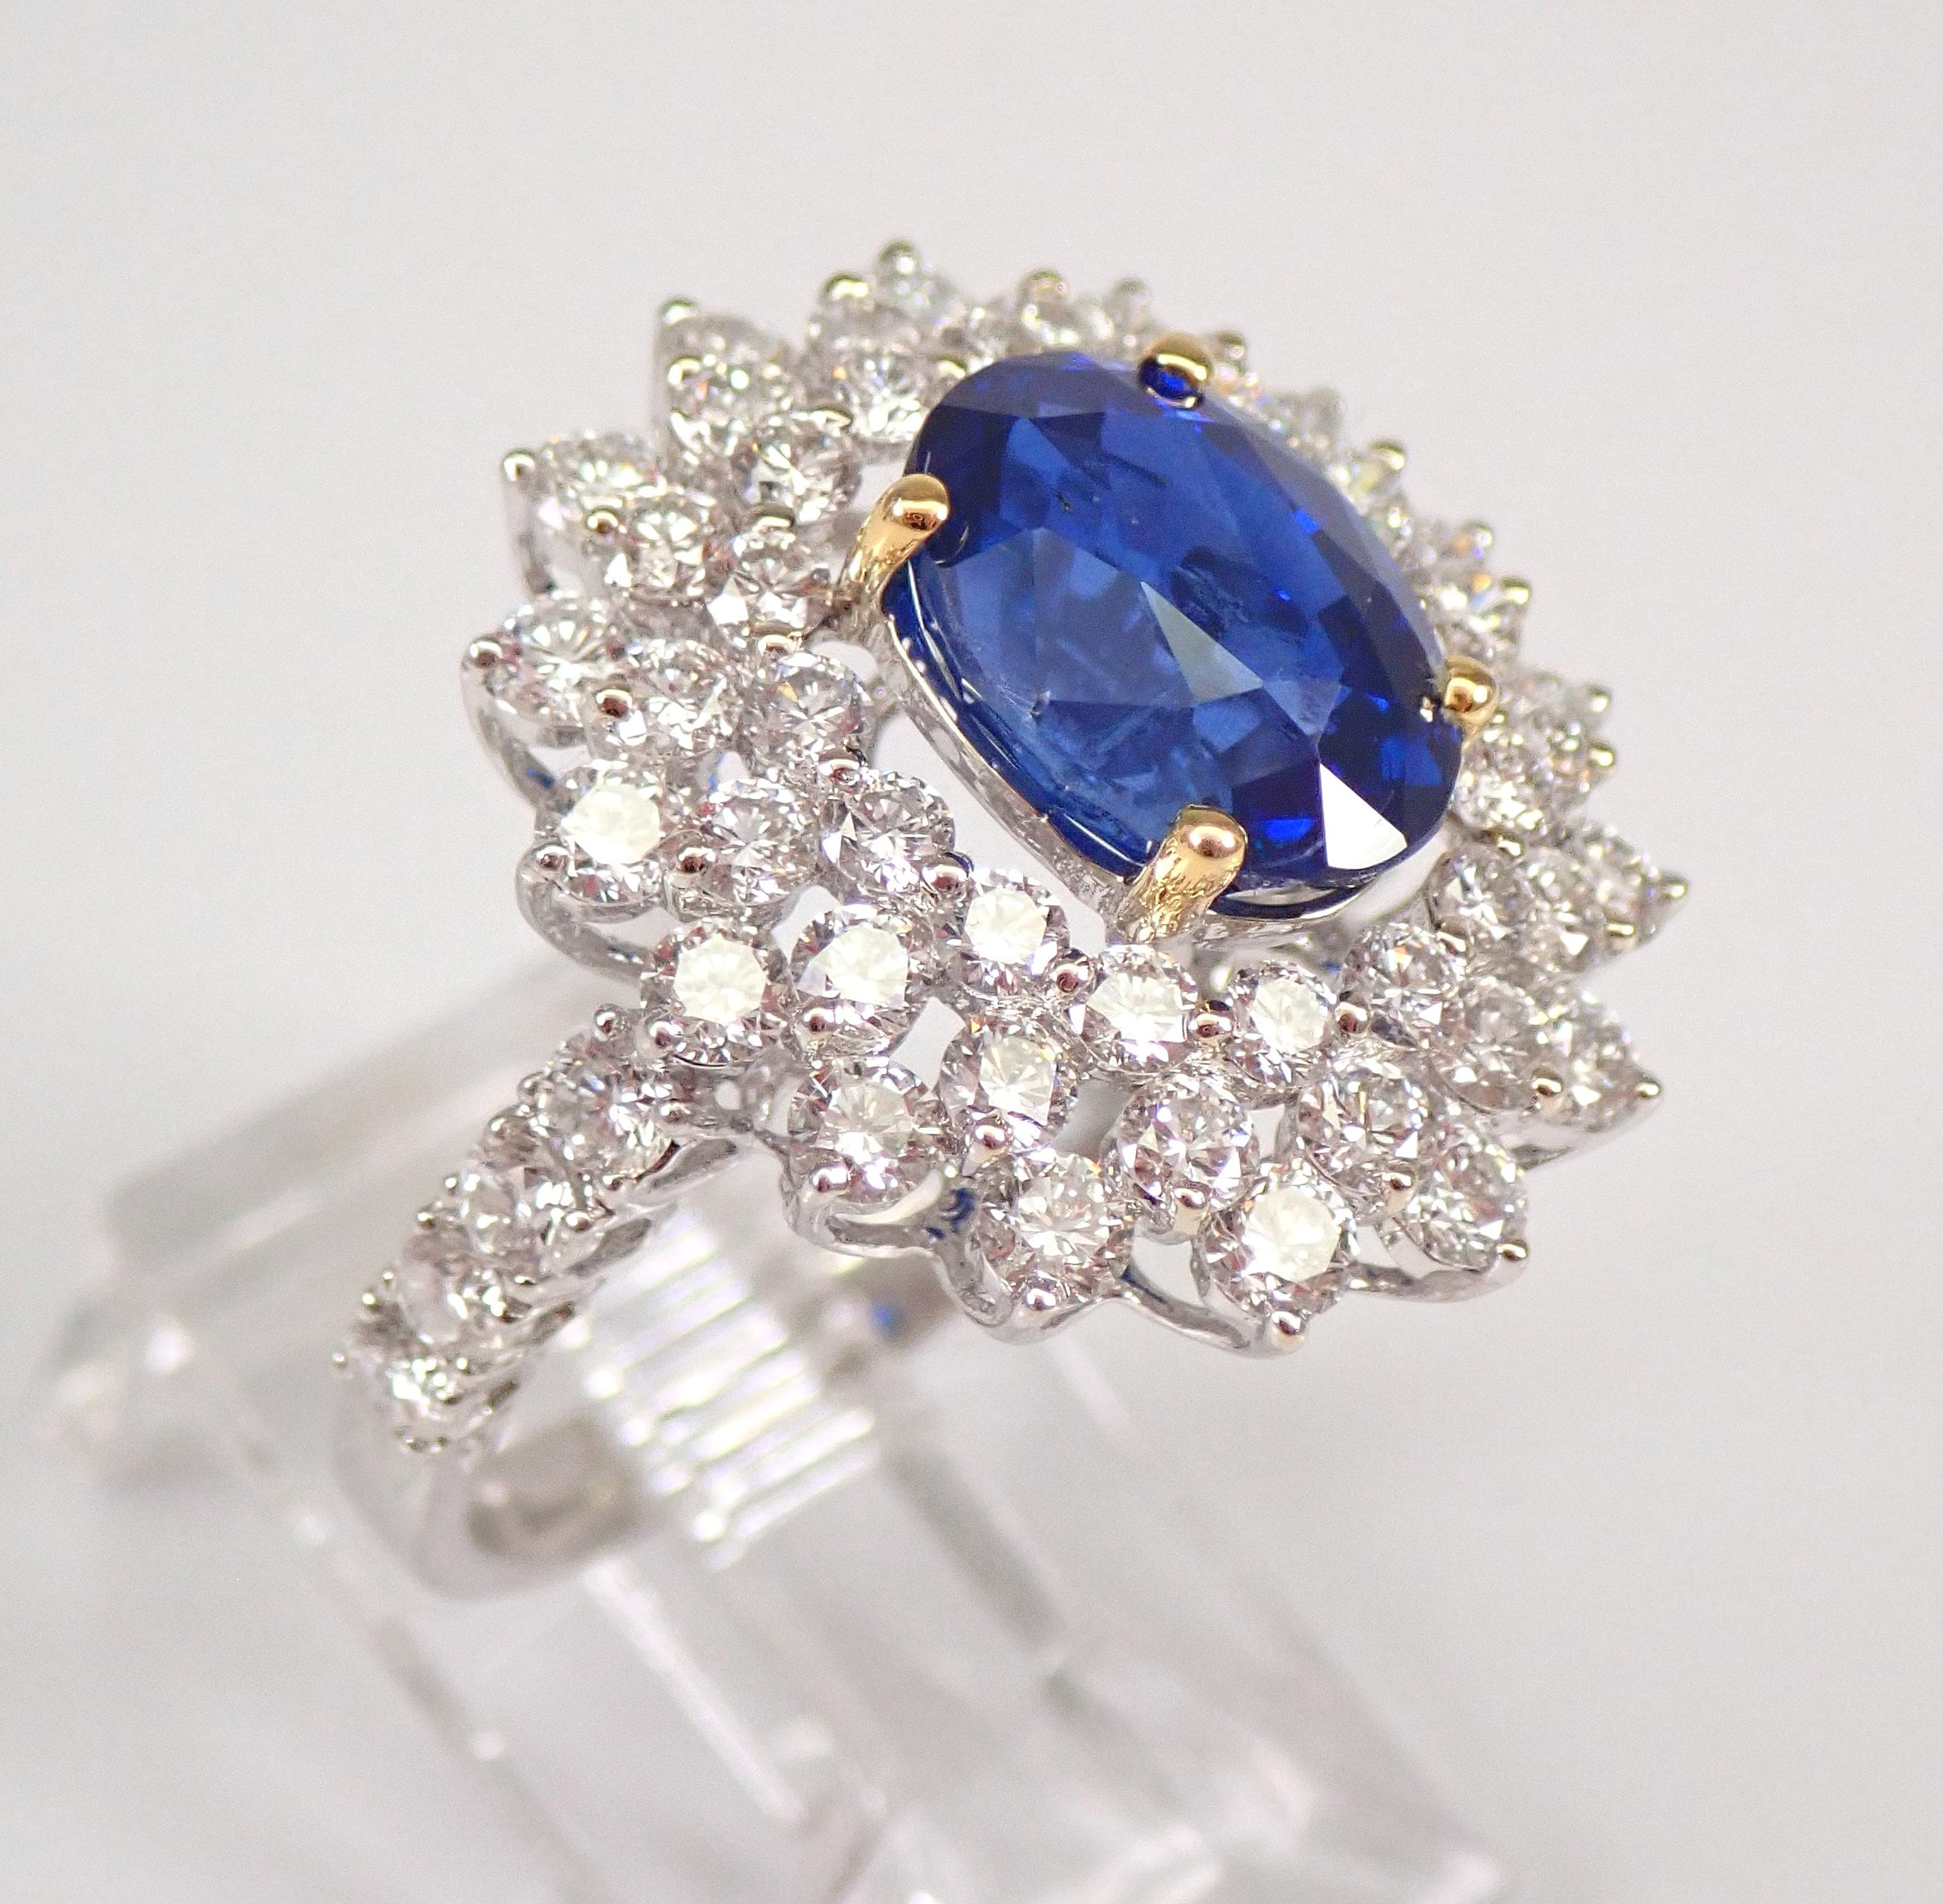 Diana 6ct Oval Cut Diamond Engagement Ring 18k White Gold | Nekta New York